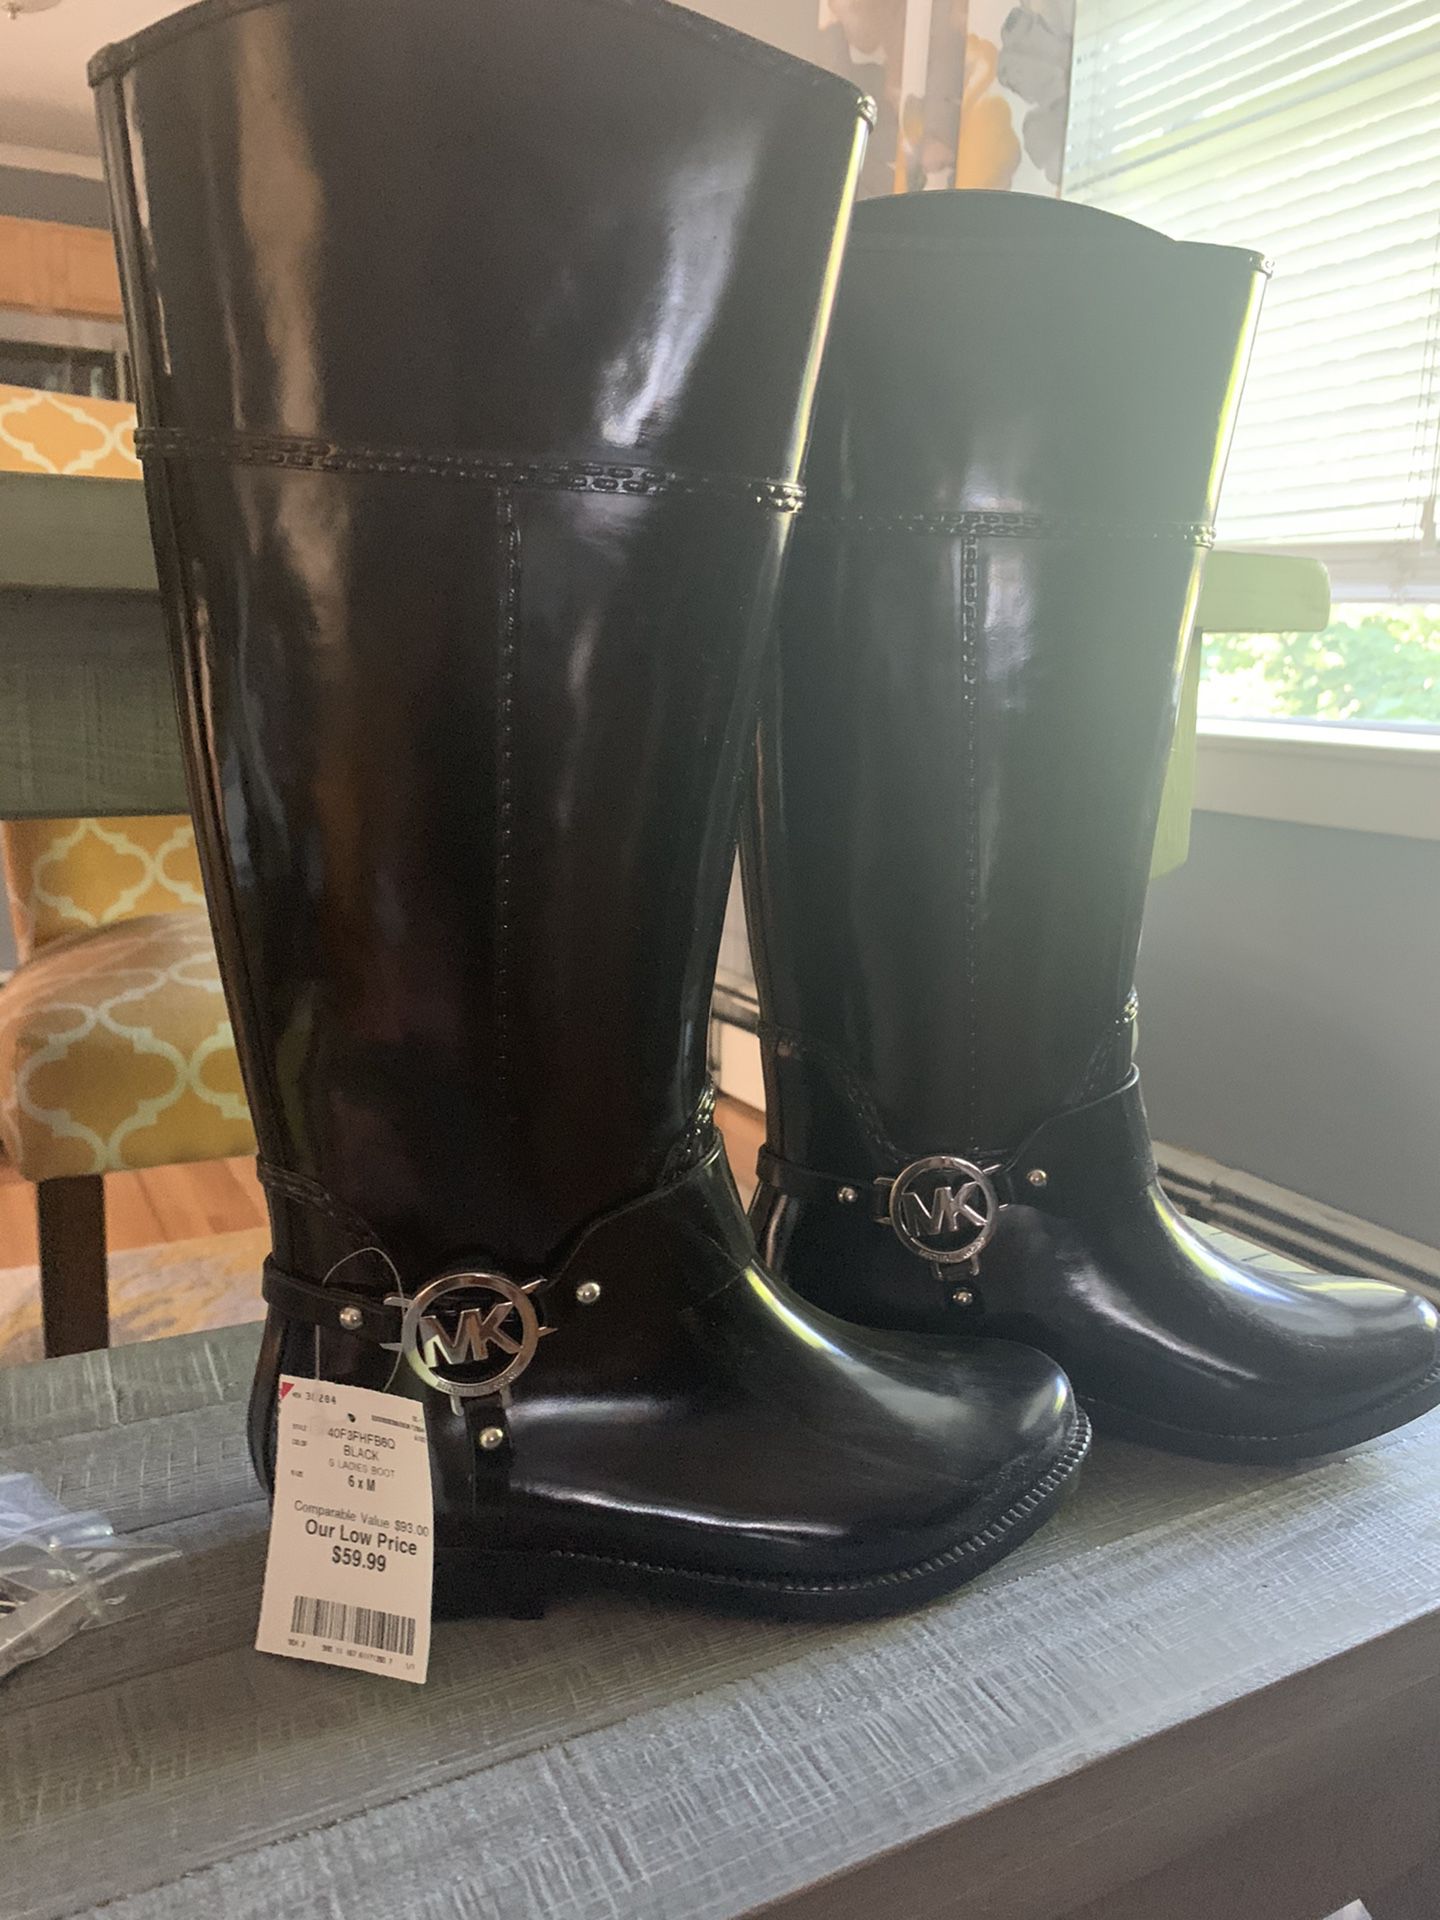 Michael Kors rain boots